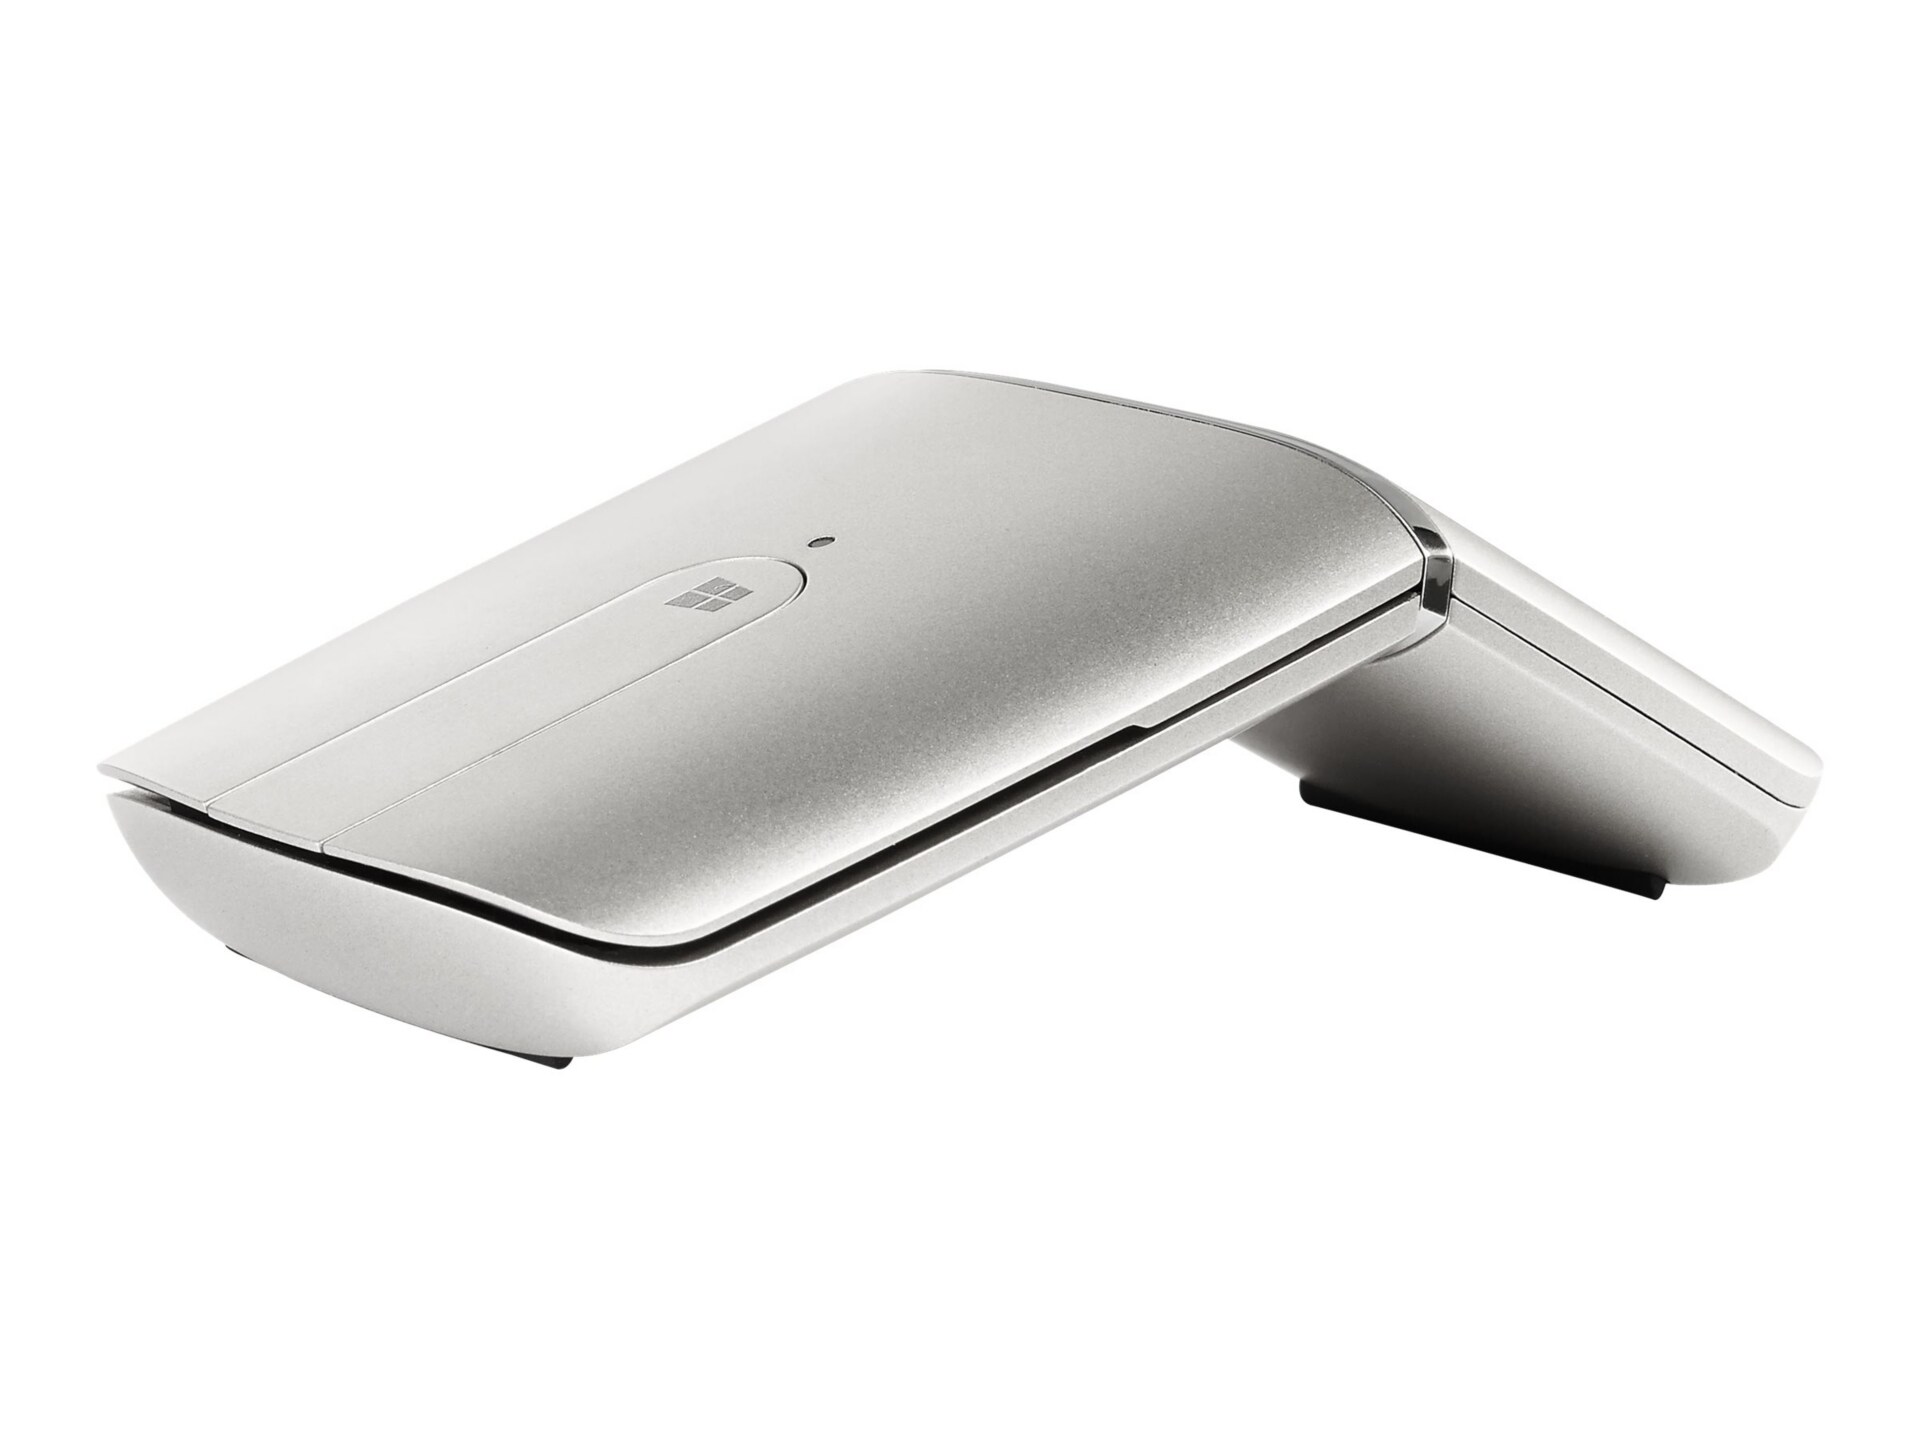 Lenovo Yoga Mouse - mouse / remote control - 2.4 GHz, Bluetooth 4.0 - silve